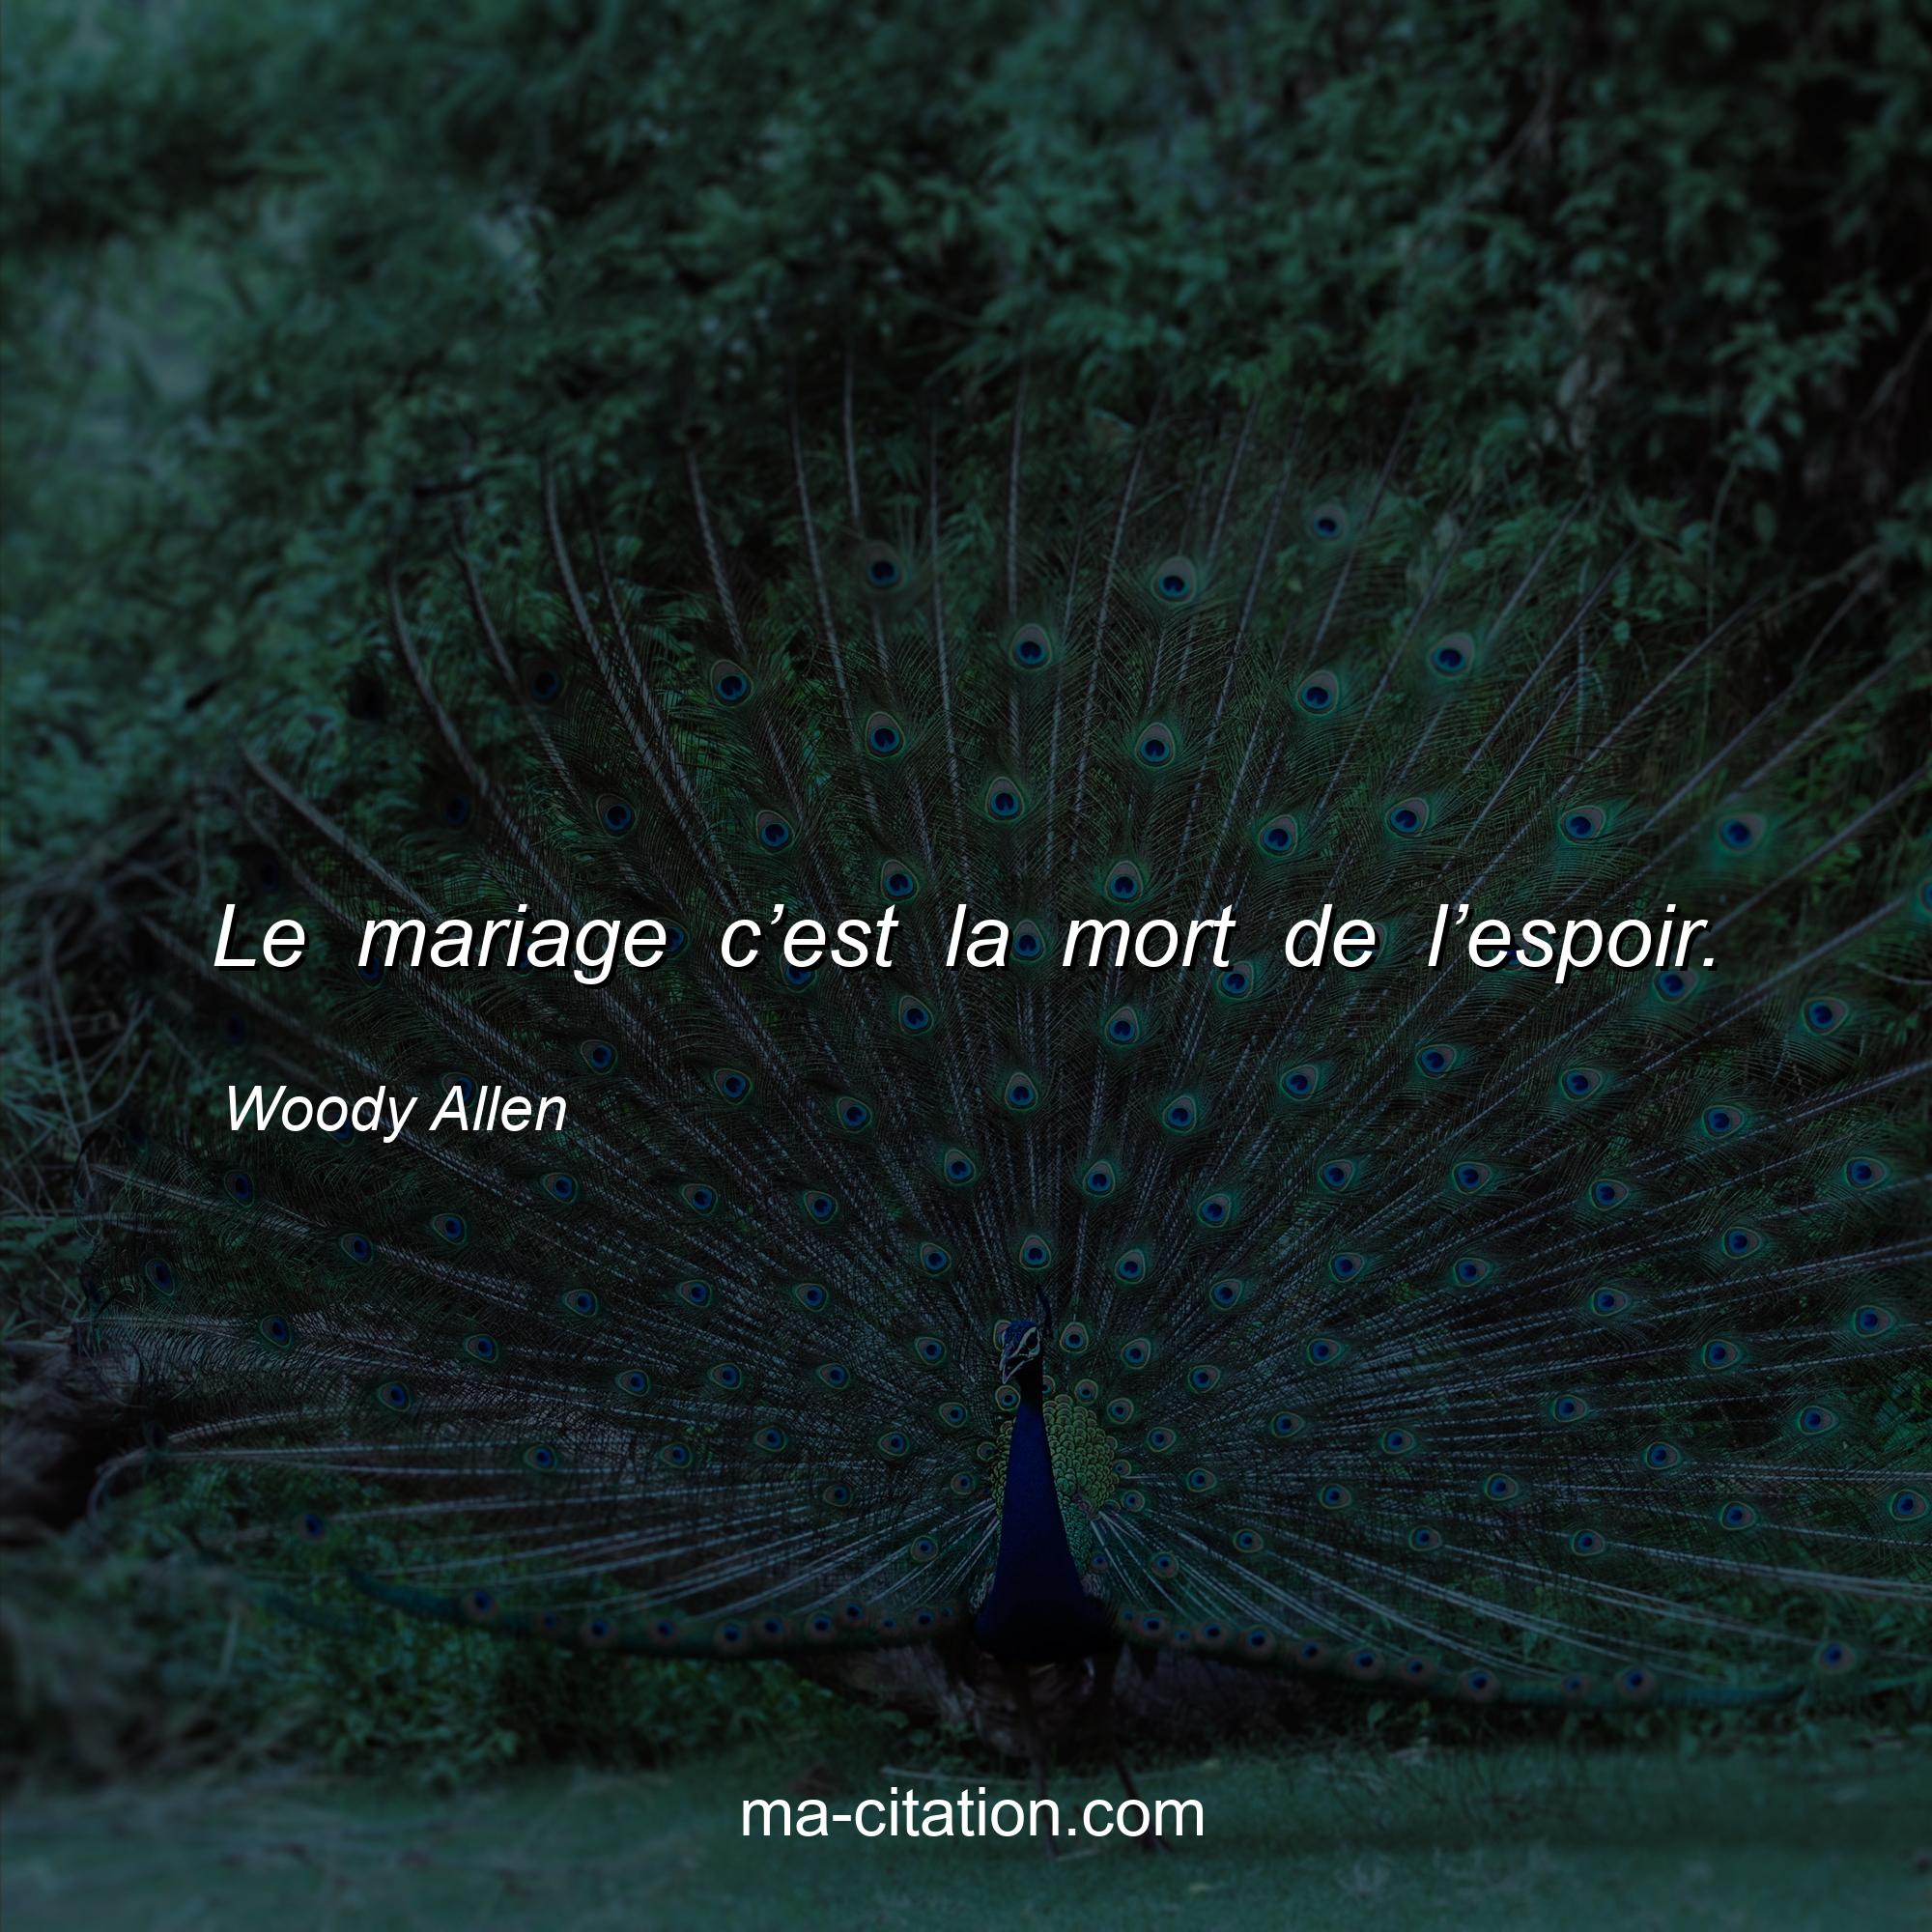 Woody Allen : Le mariage c’est la mort de l’espoir.